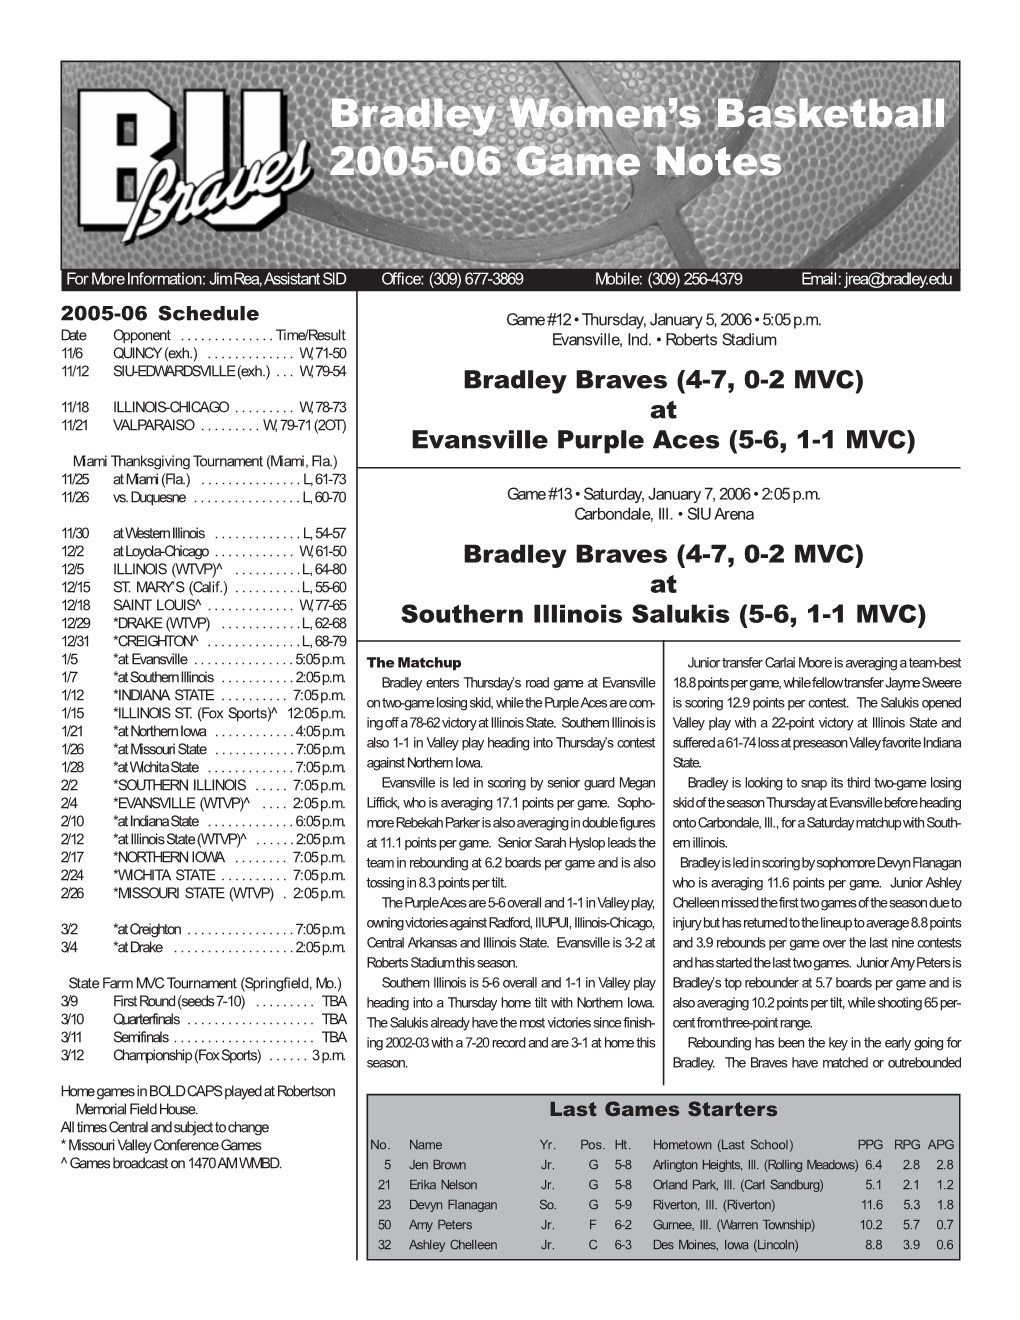 Bradley Women's Basketball 2005-06 Game Notes